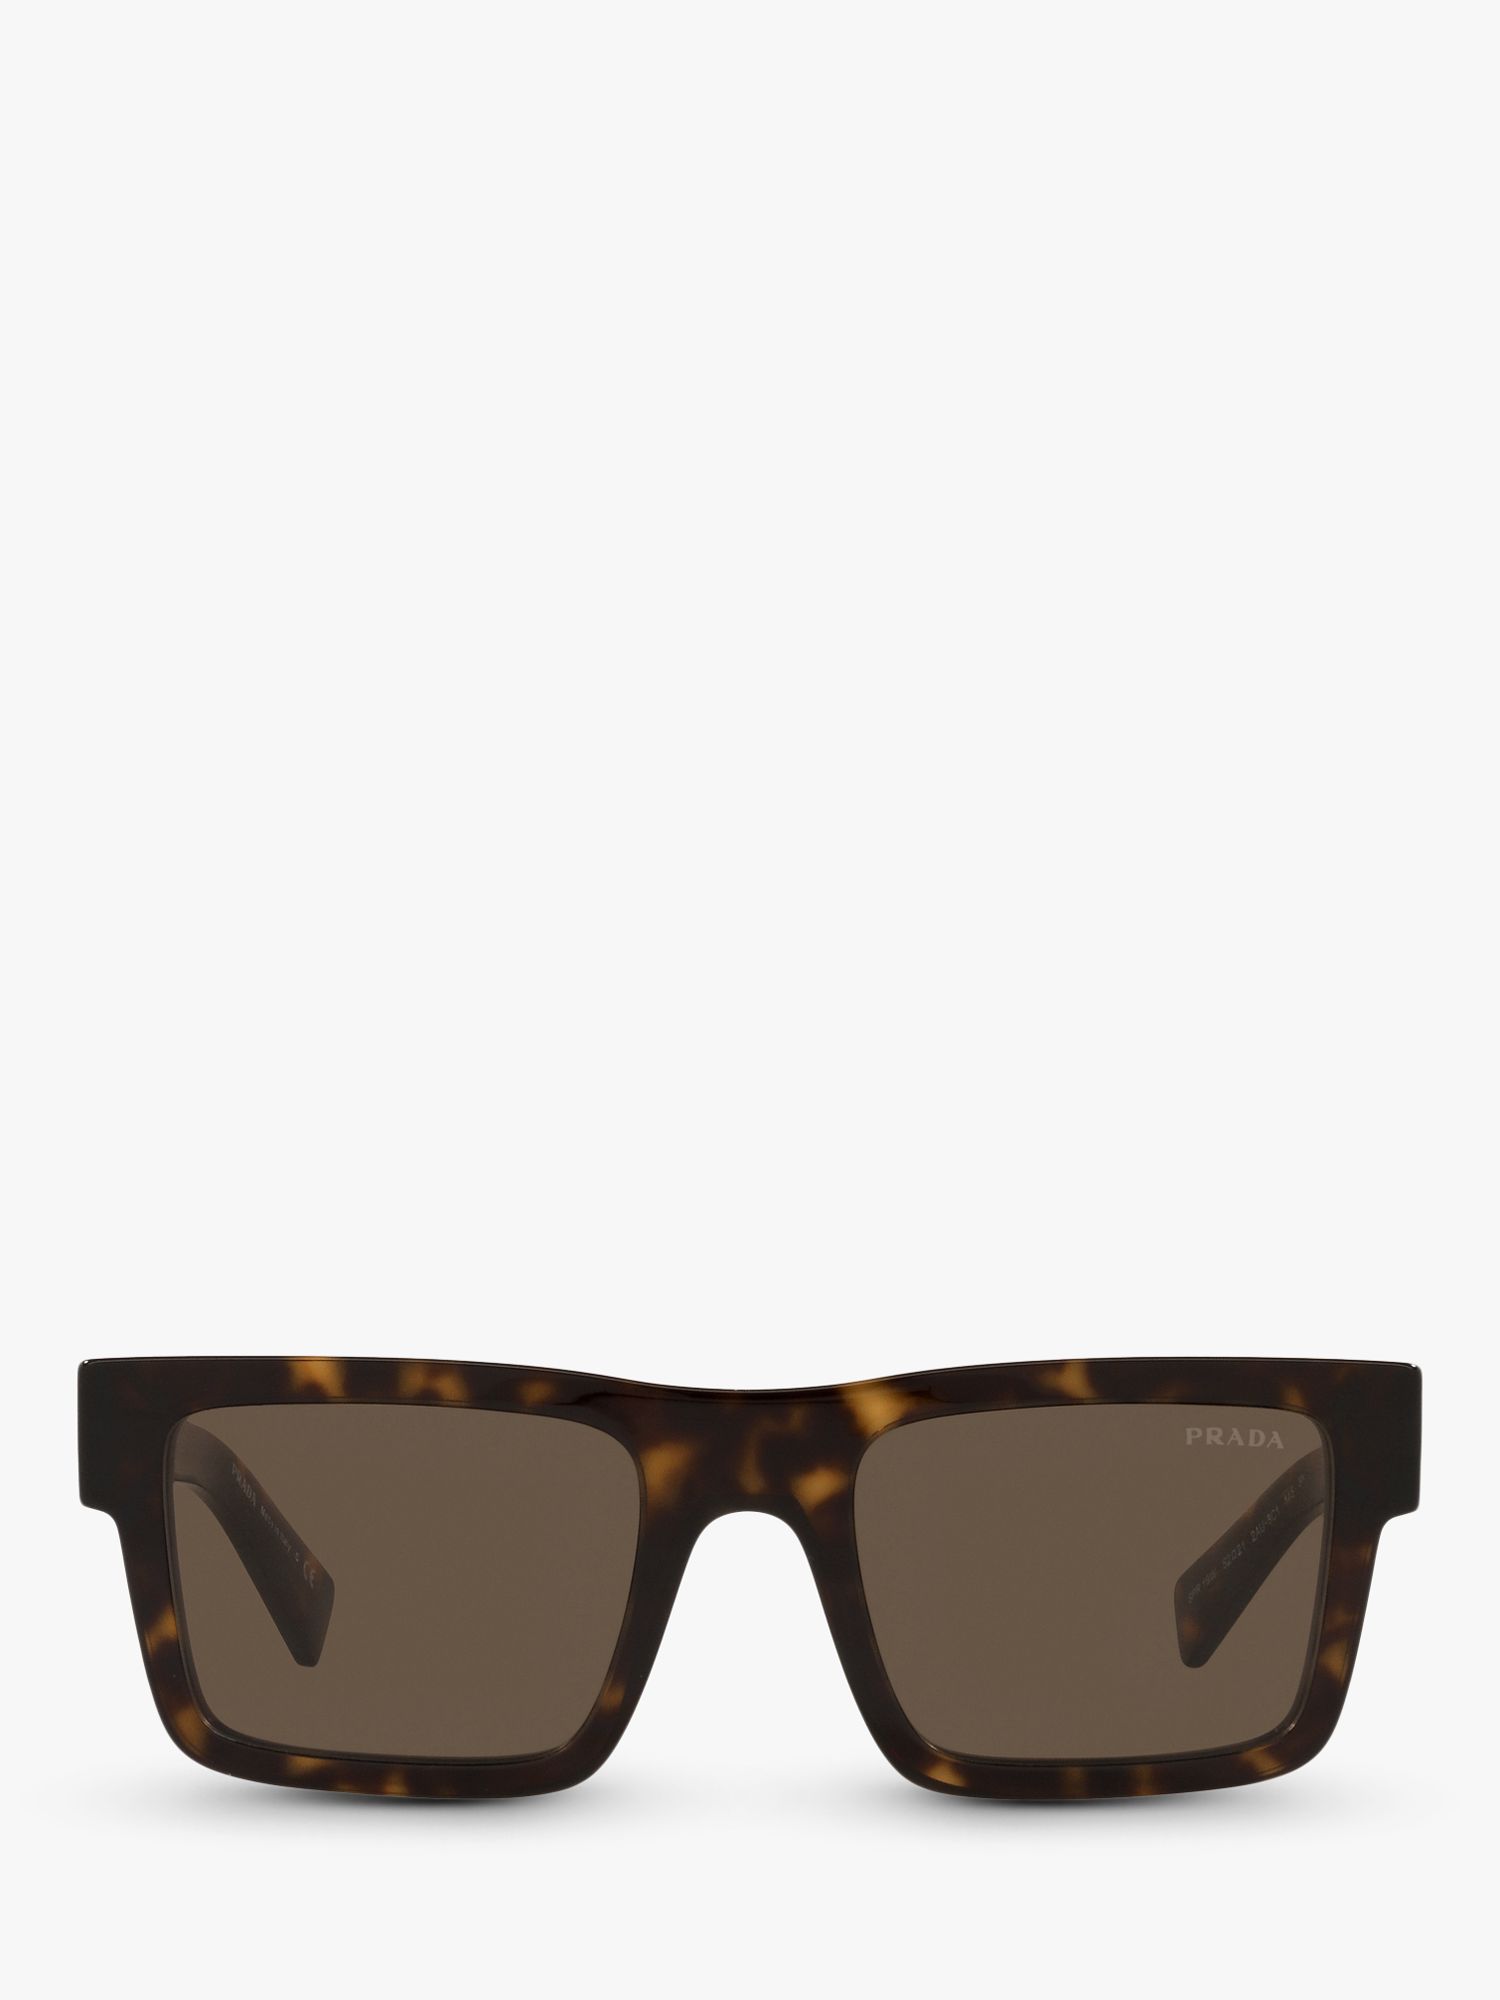 Buy Prada PR 19WS Men's Tortoiseshell Square Sunglasses, Brown Online at johnlewis.com